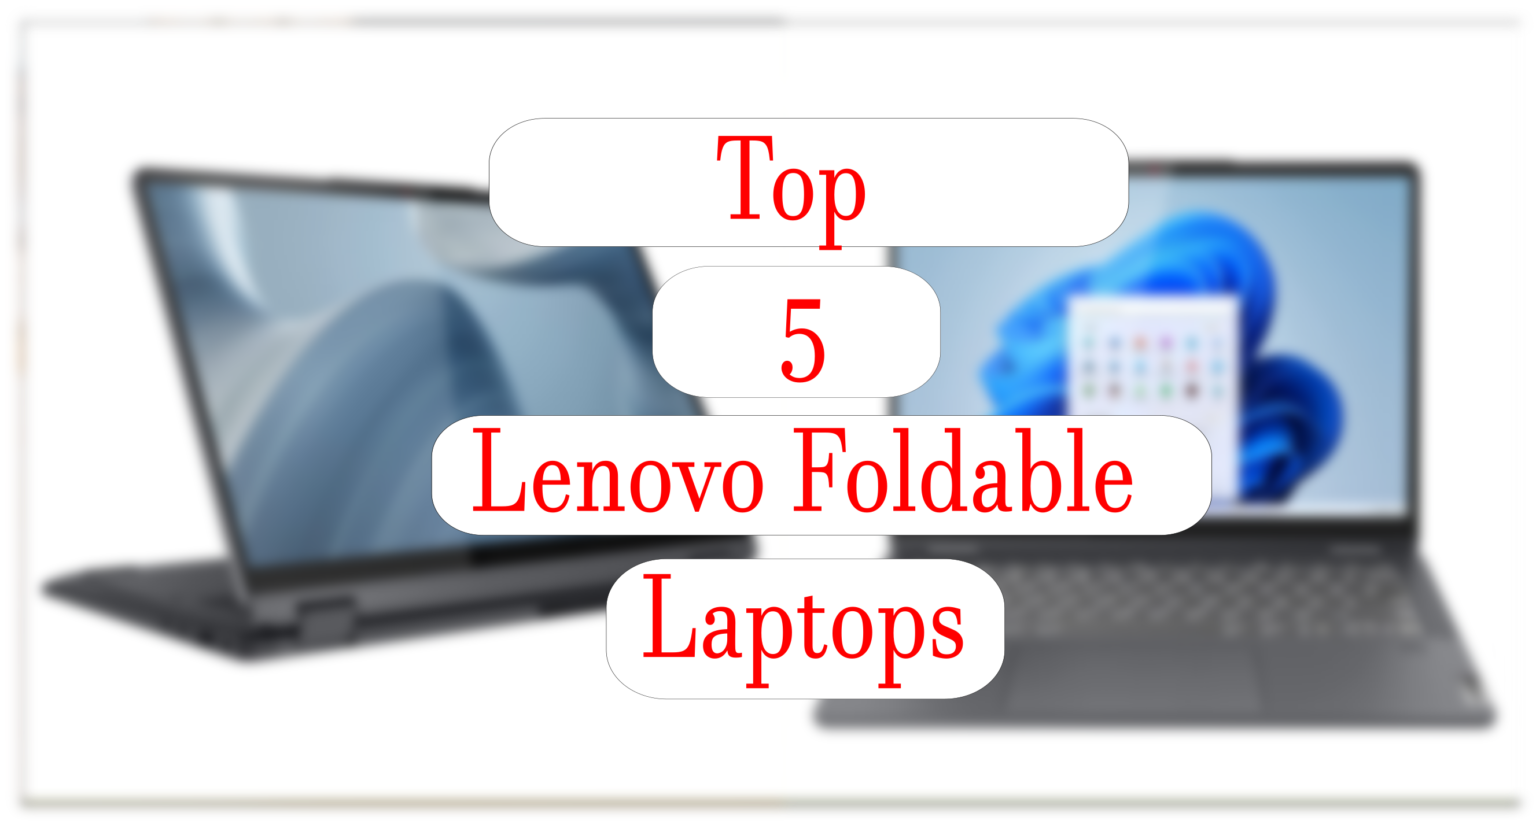 Top 5 Best Lenovo Foldable Laptops codewithdc.com